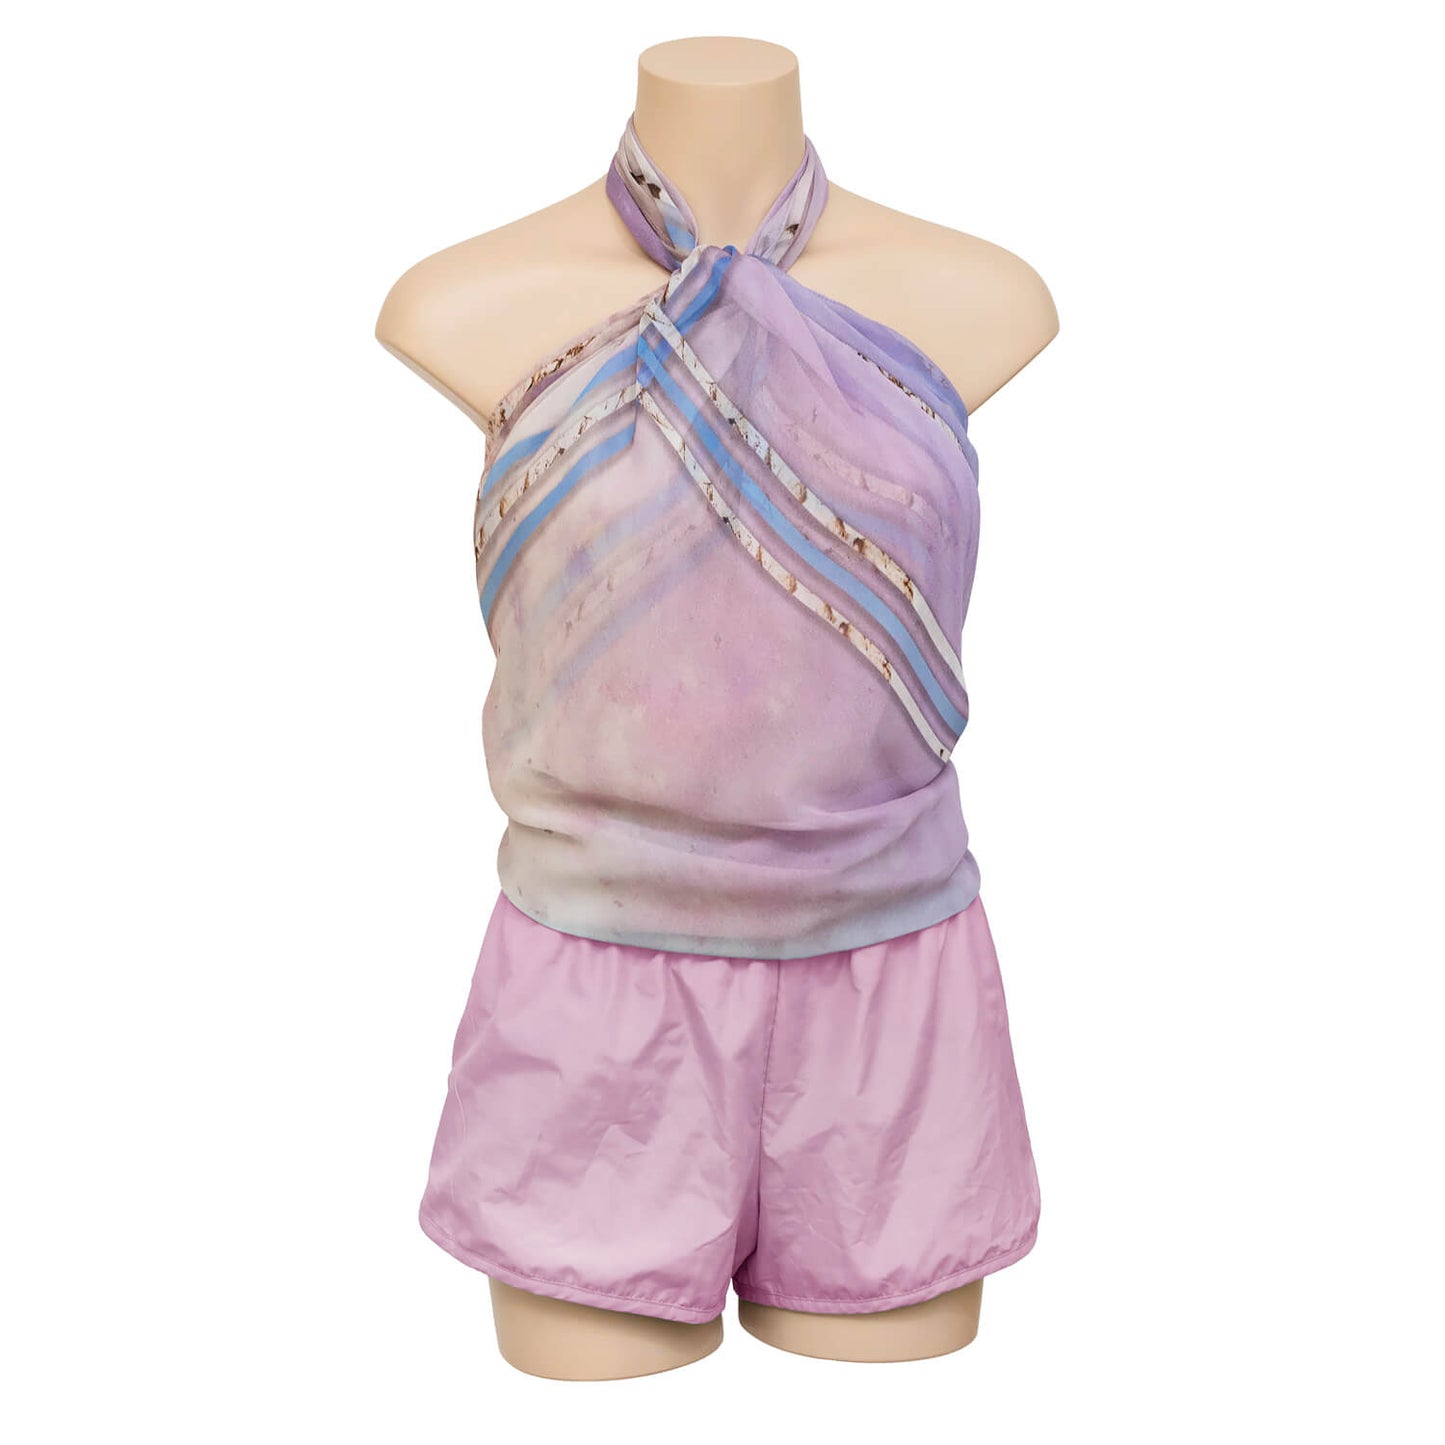 salt lake square silk scarf worn at halter top with pink shorts